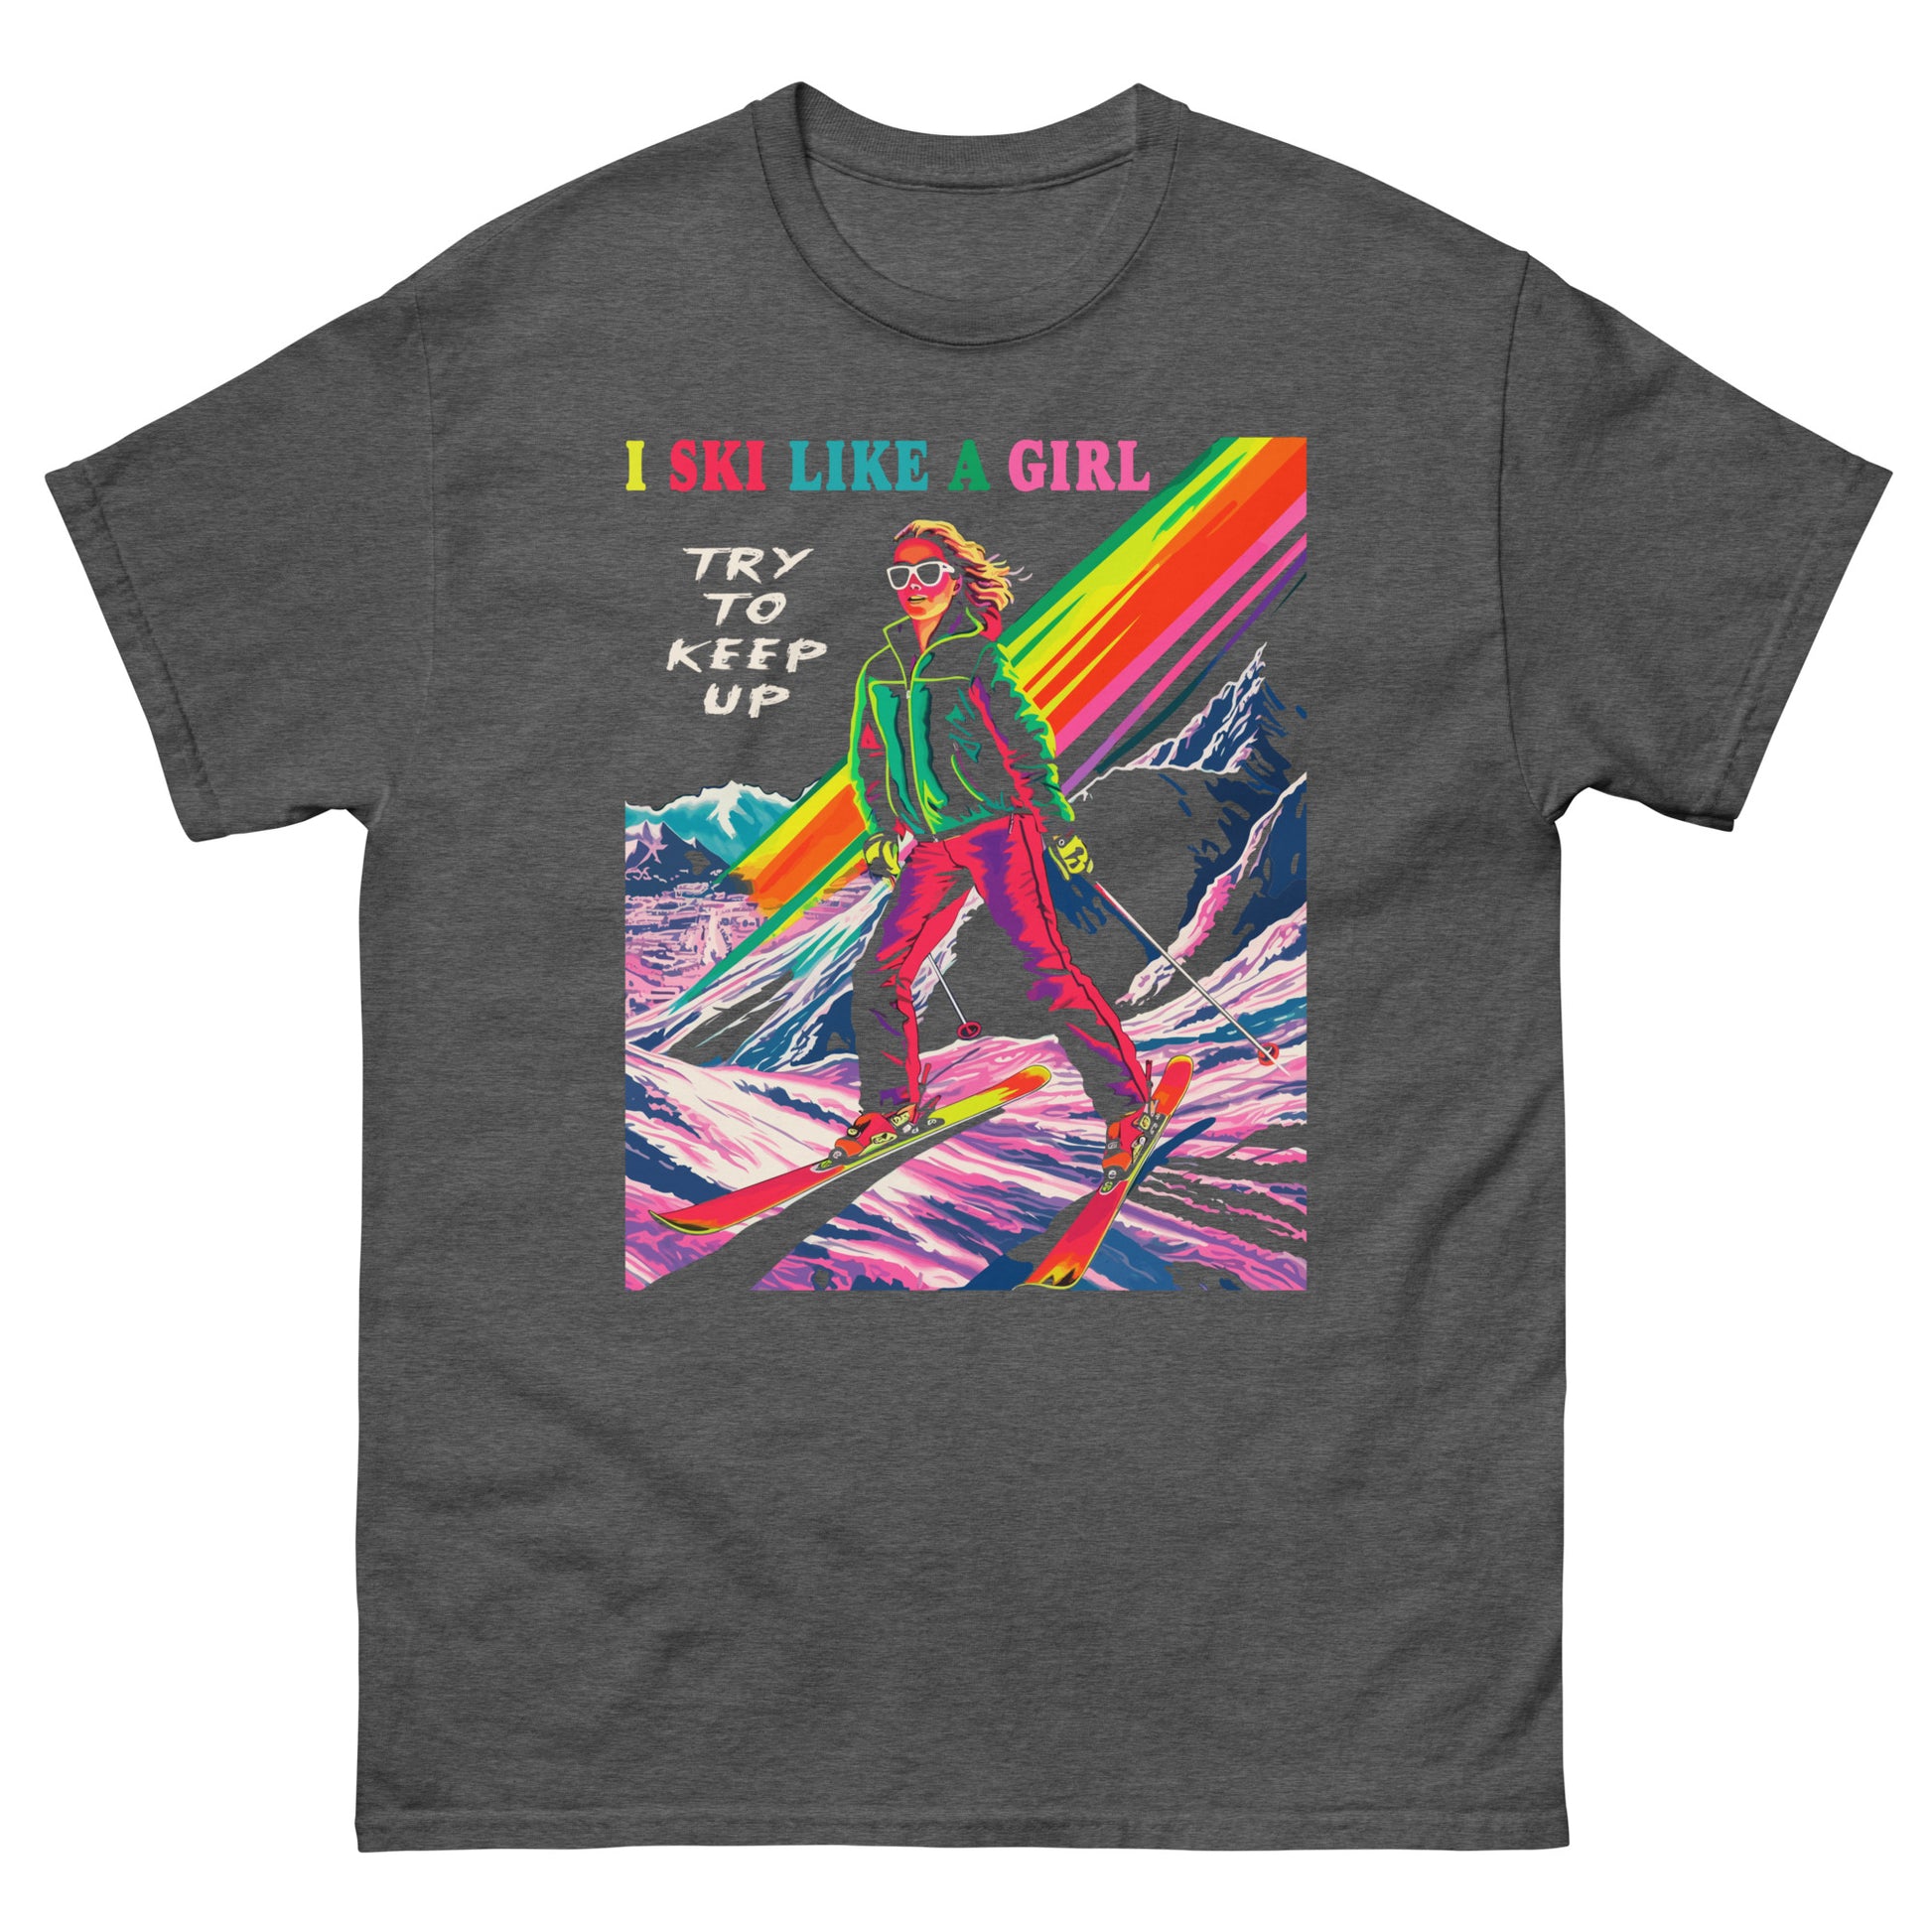 I ski like a girl try to keep up Whistler printed t-shirt